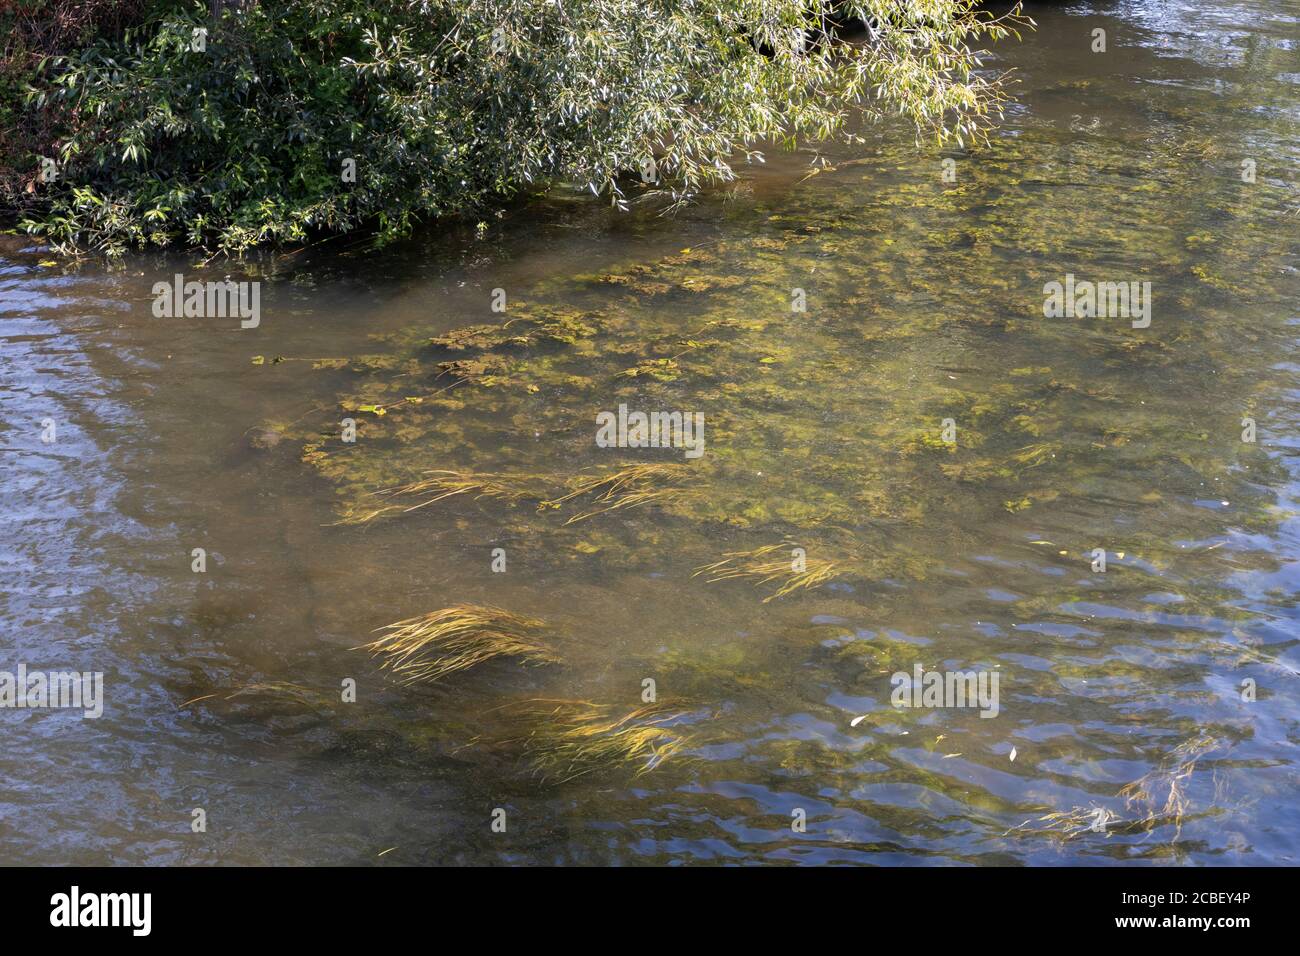 River Avon showing underwater reeds Stock Photo